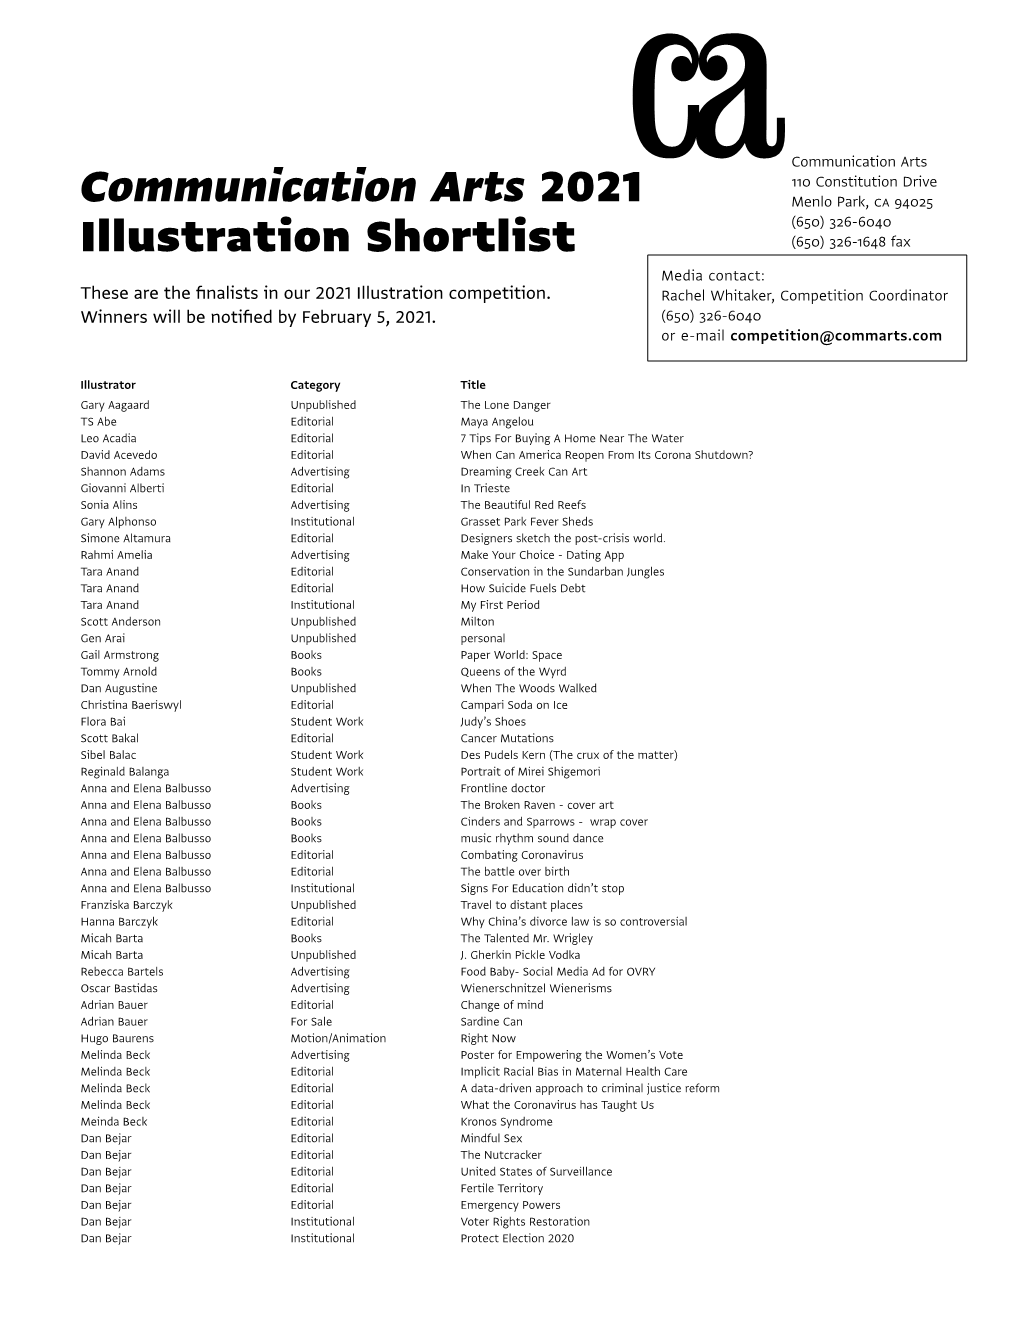 Communication Arts 2021 Illustration Shortlist